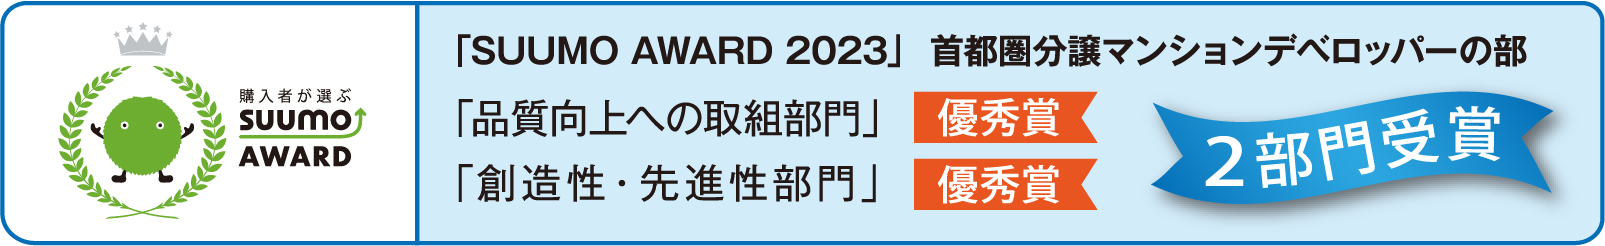 SUUMO AWARD 2023 2部門受賞